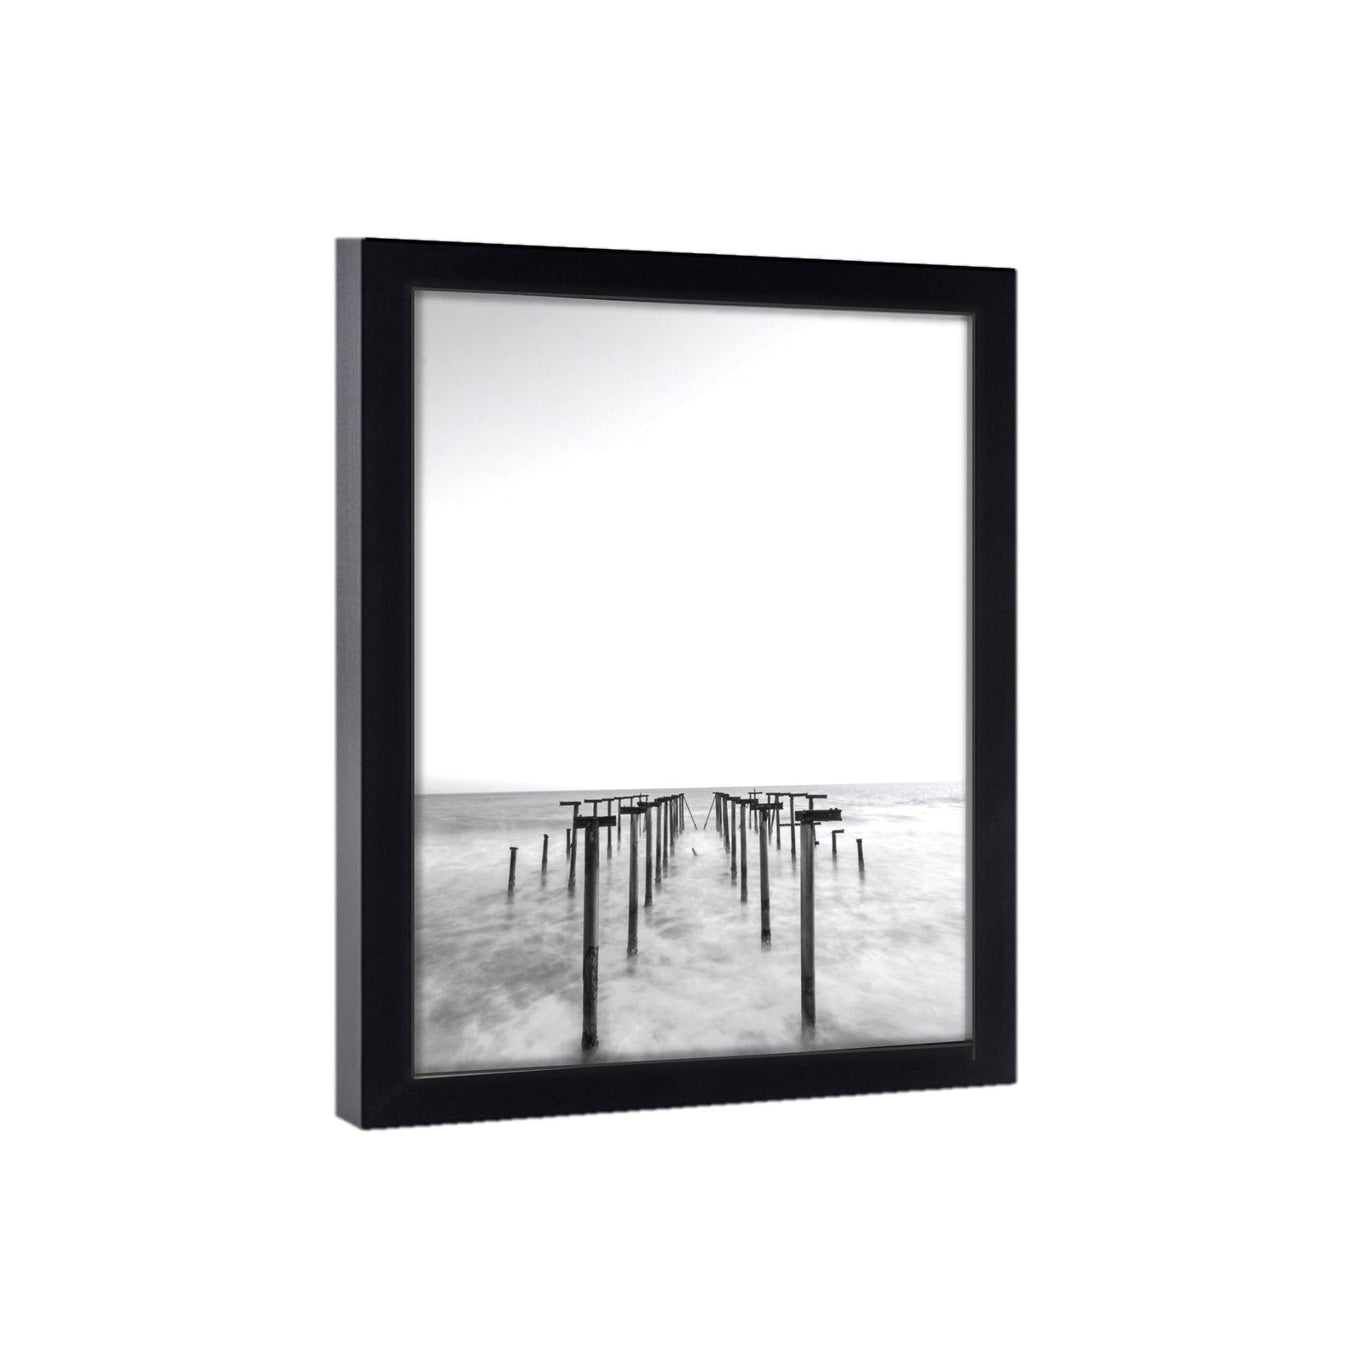 Black Picture Frames Custom Framing - Picture frames - New Jersey Frame Shop Custom Framing